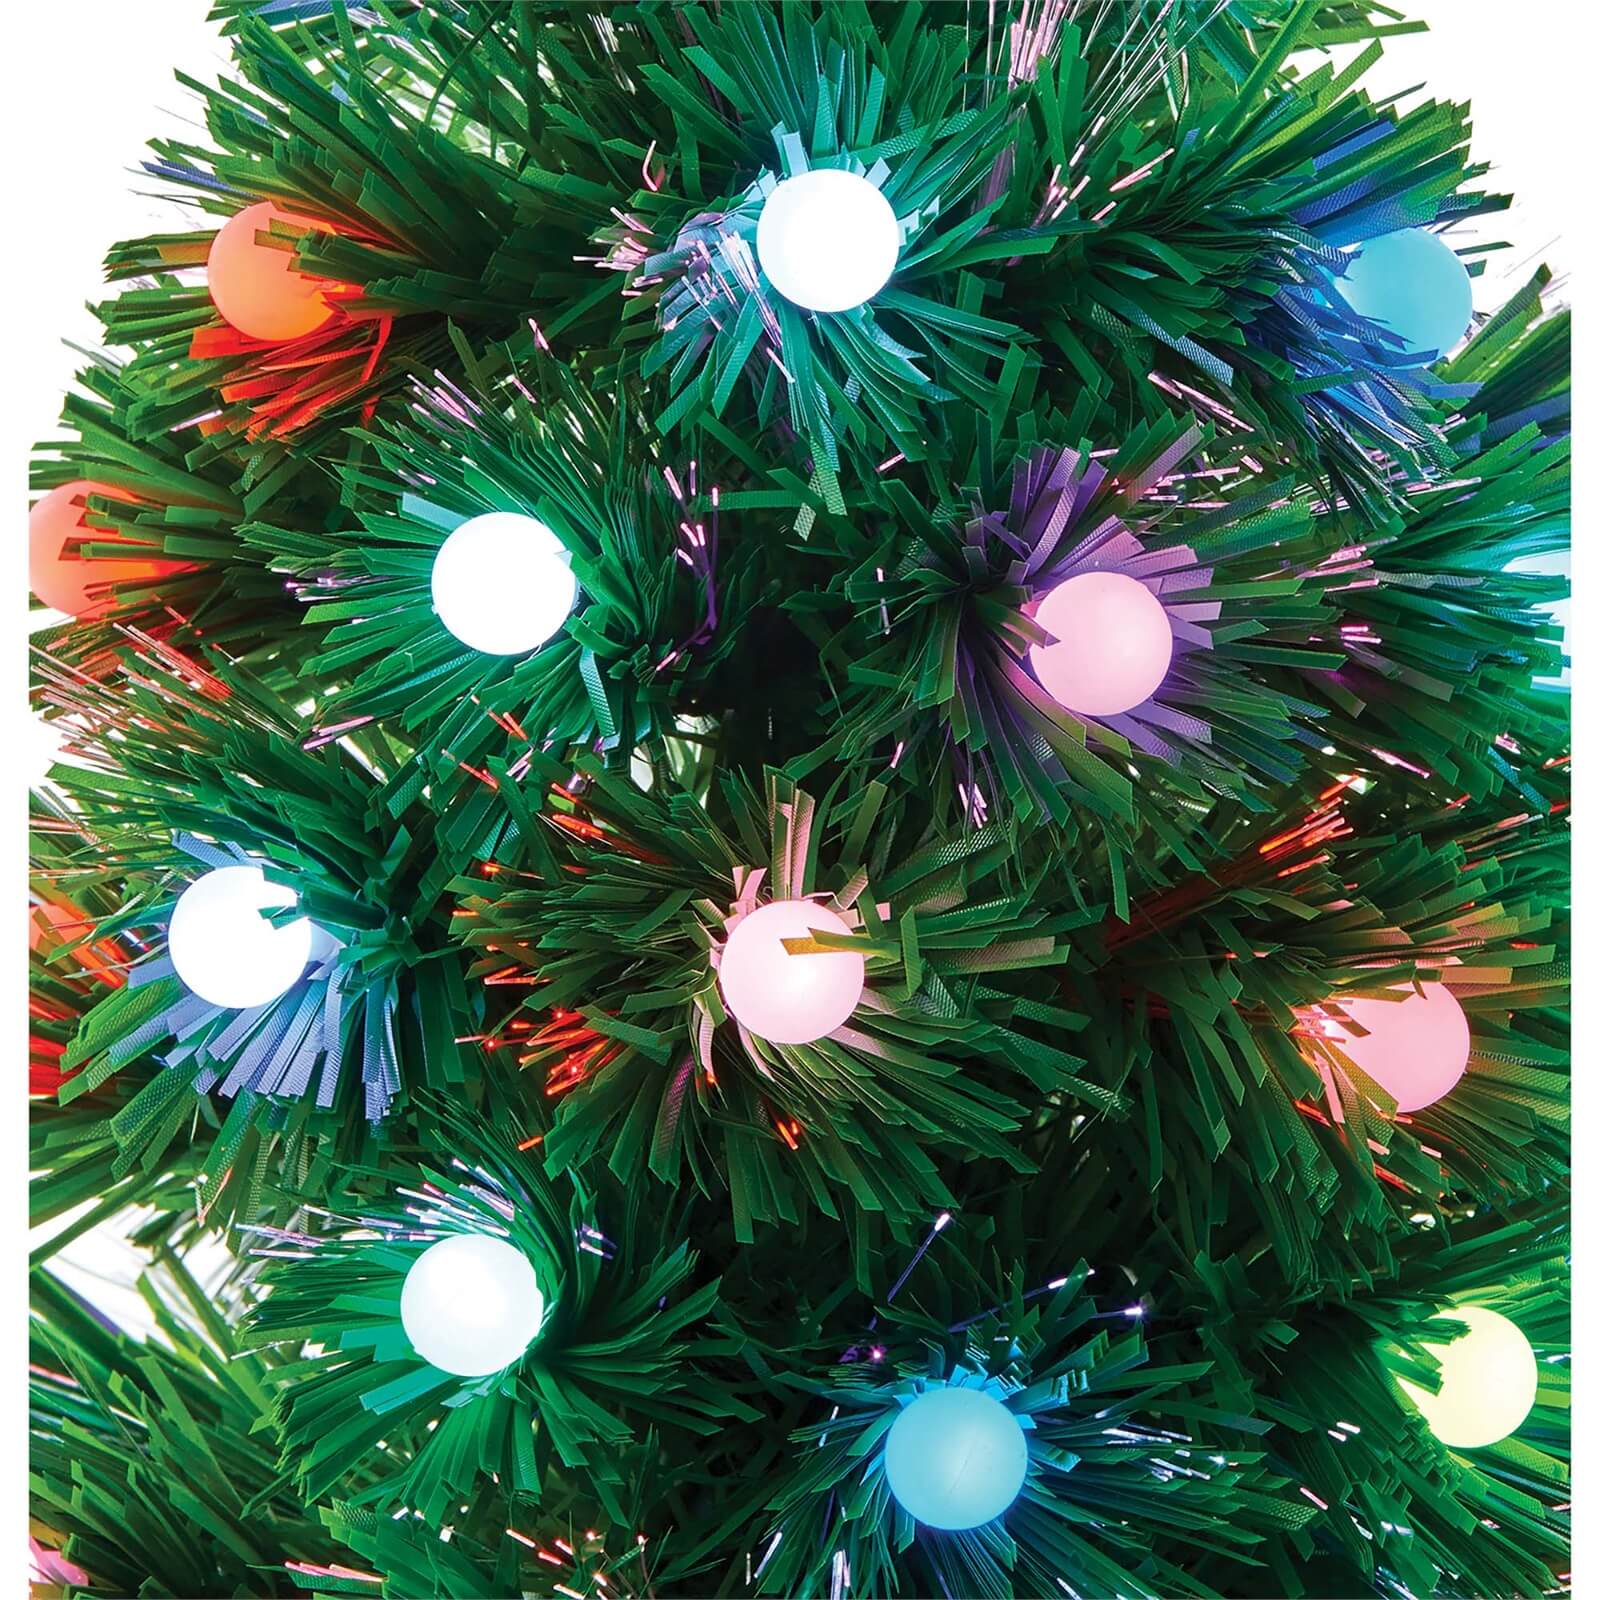 2ft 6 Pre-lit Fibre Optic Tree with Colour Change Ball Decoration